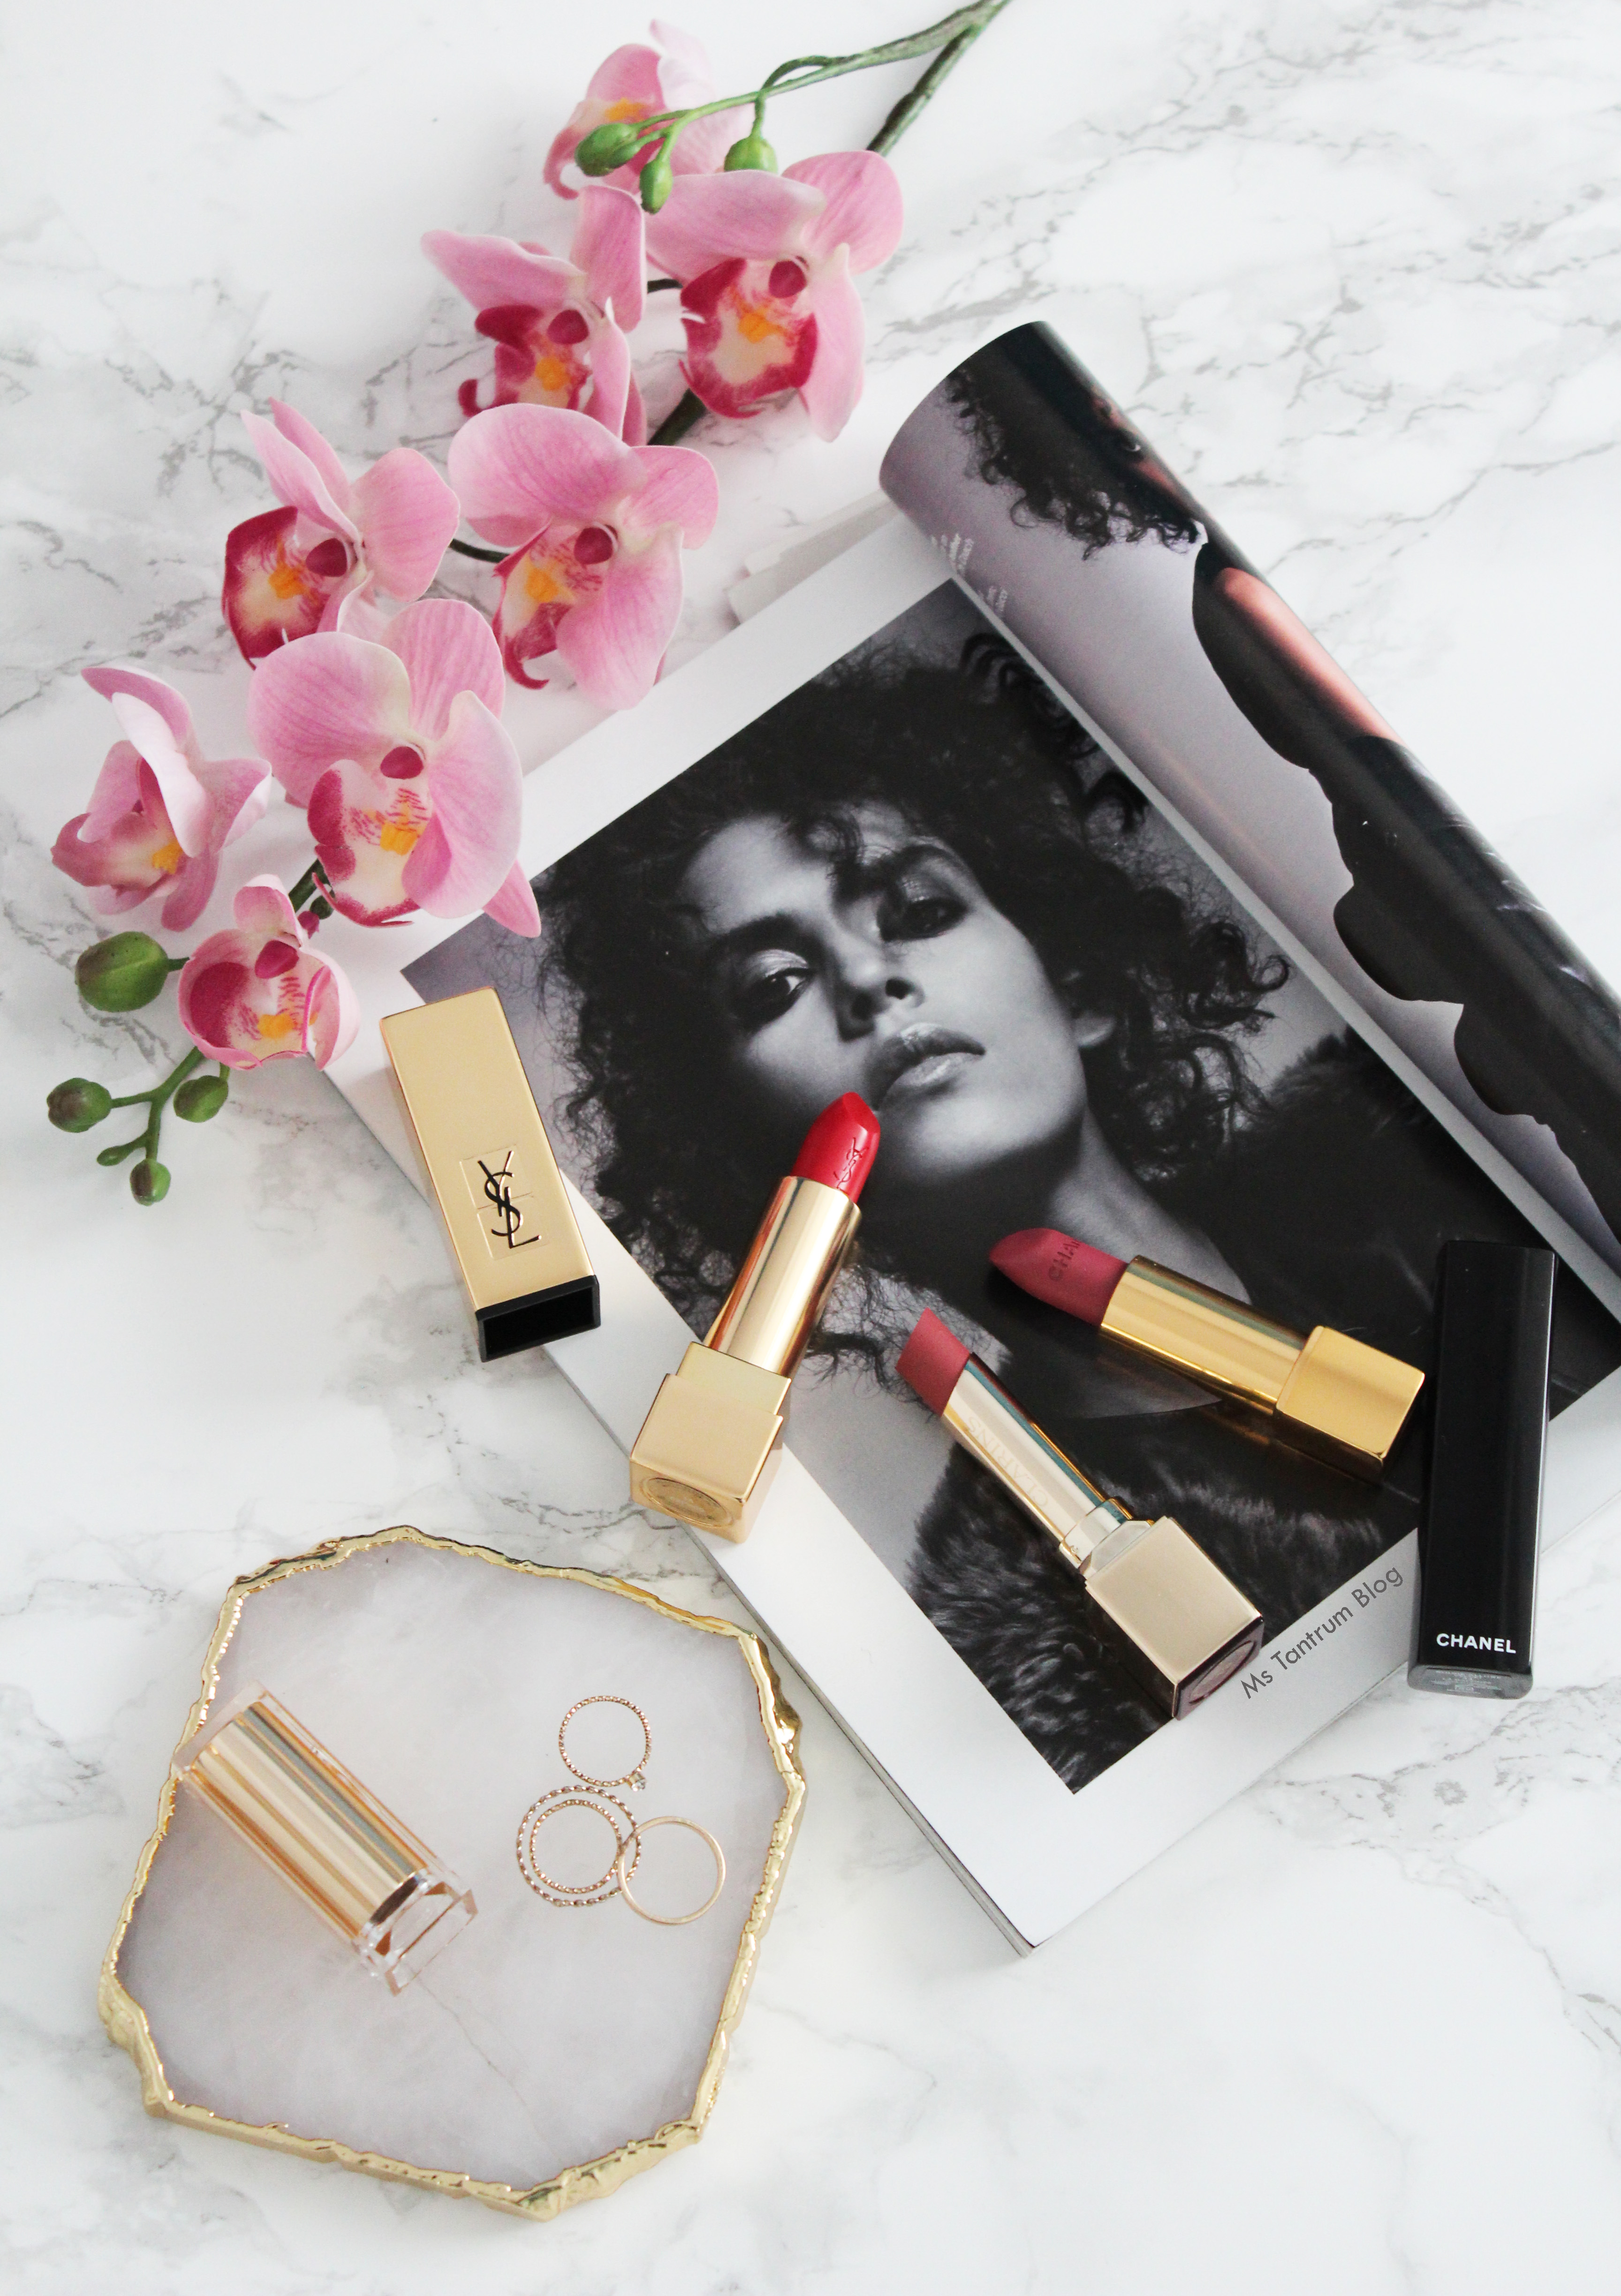 3 lipsticks for all skin tones - Ms Tantrum Blog